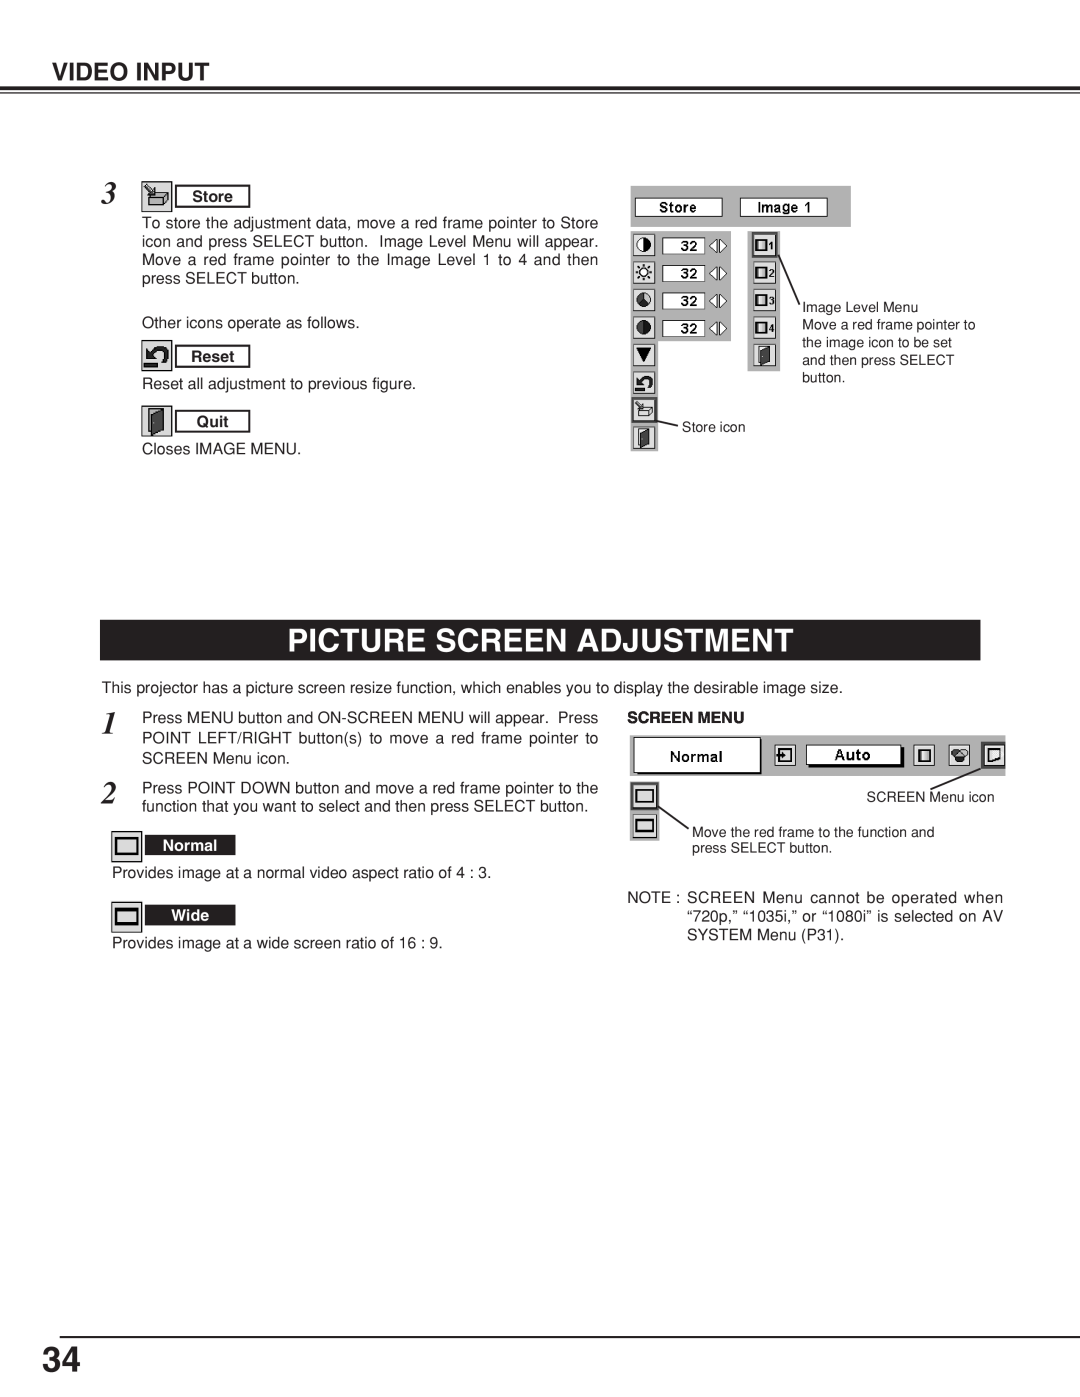 BOXLIGHT CP-18t manual Picture Screen Adjustment, Video Input, Store, Reset, Quit, Screen Menu 